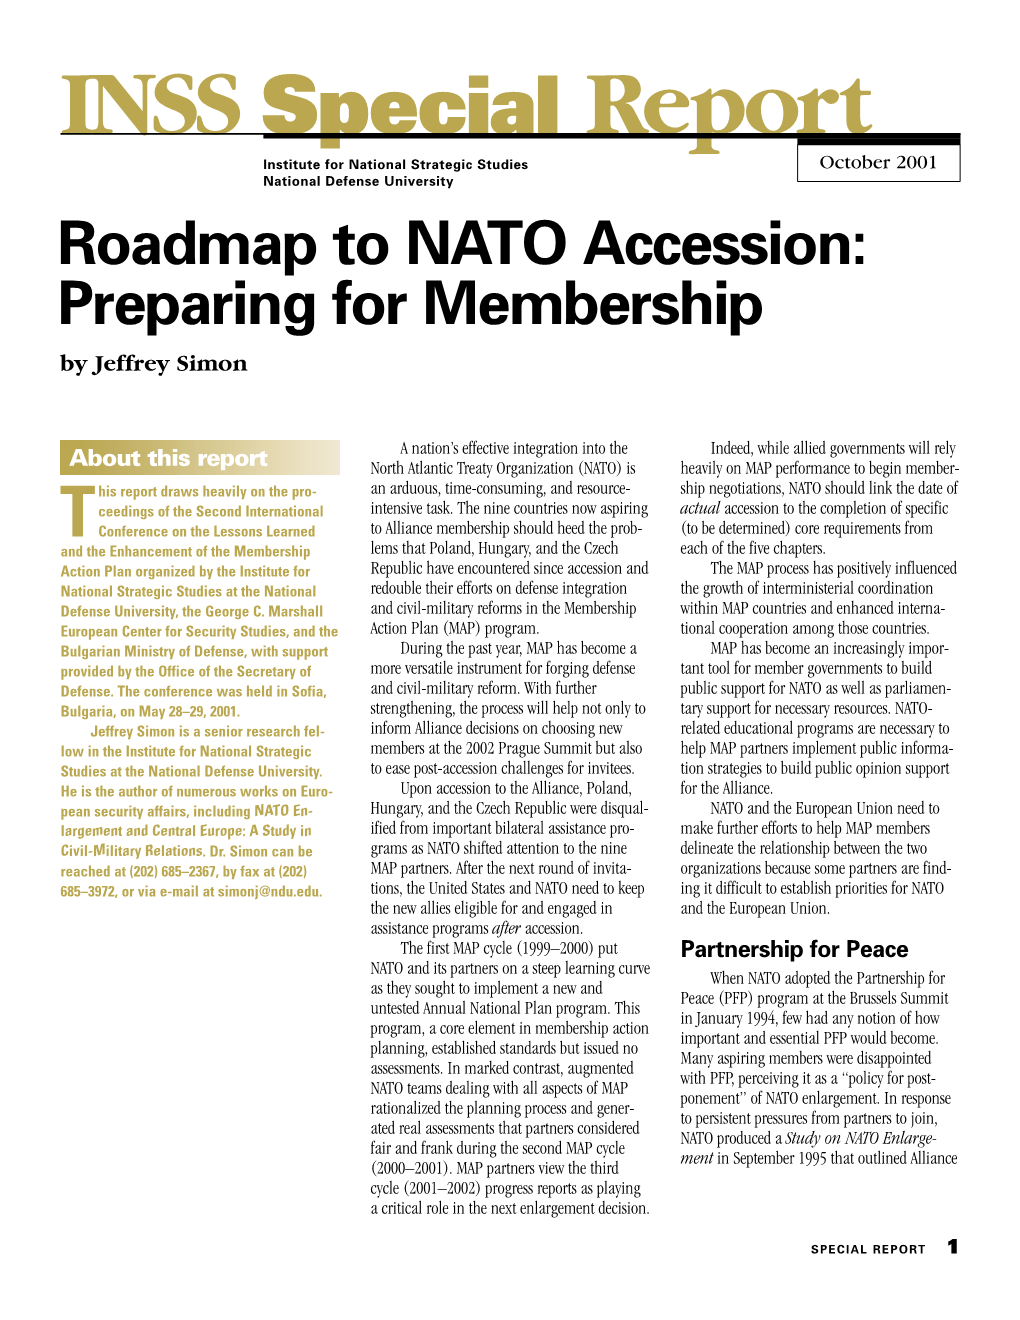 Roadmap to NATO Accession: Preparing for Membership by Jeffrey Simon